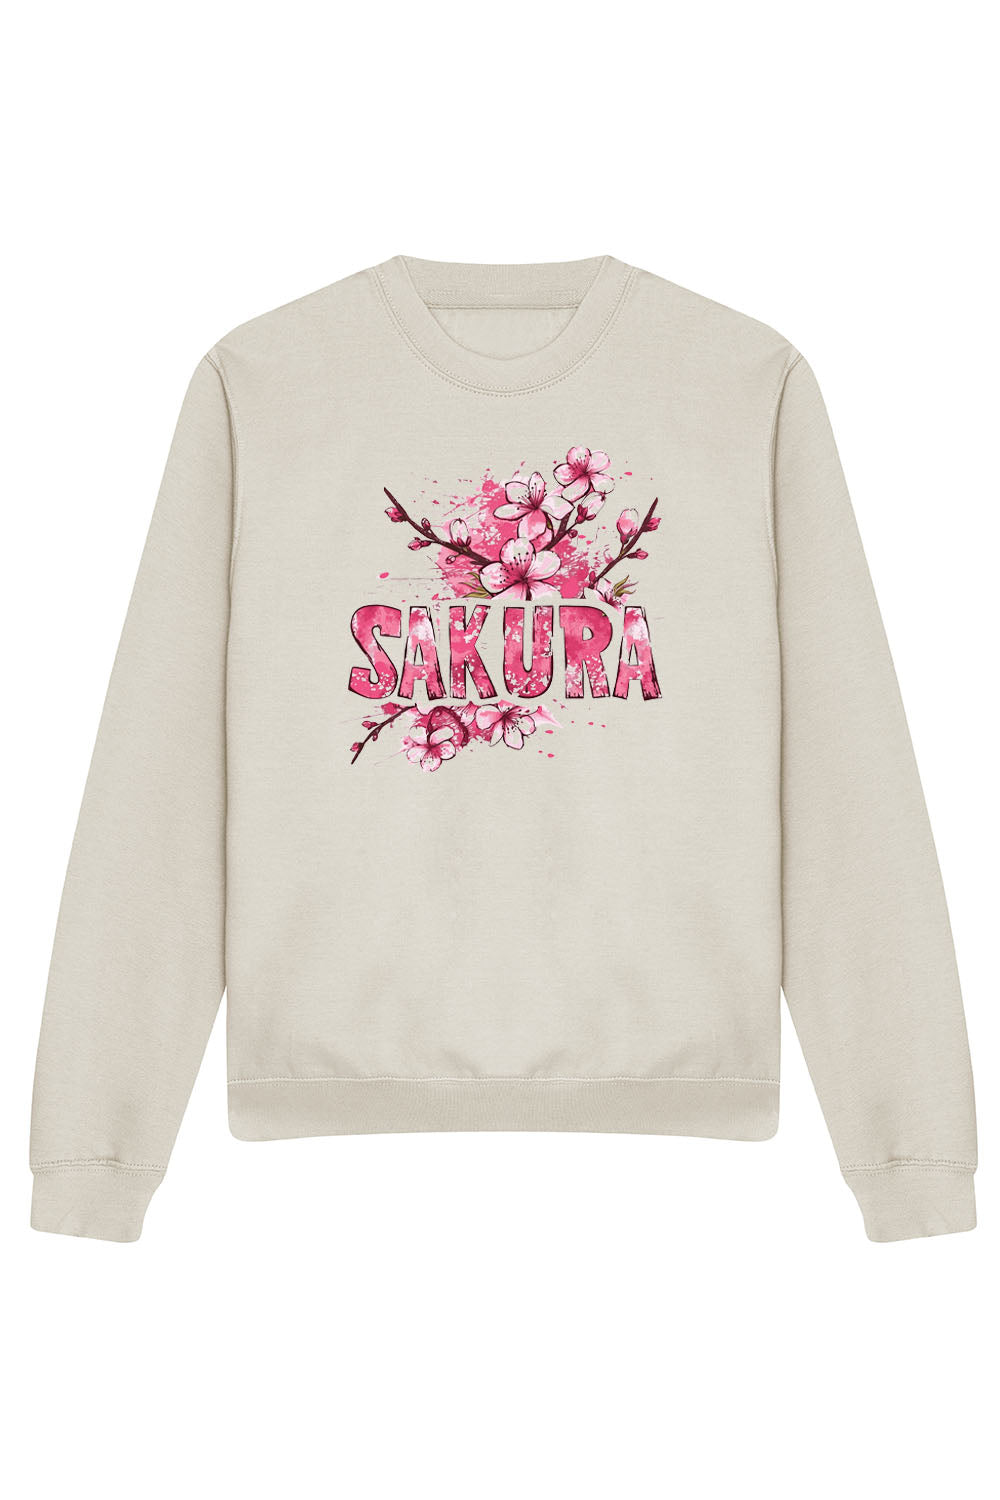 Sakura Sweatshirt In Natural Stone (Custom Pack)